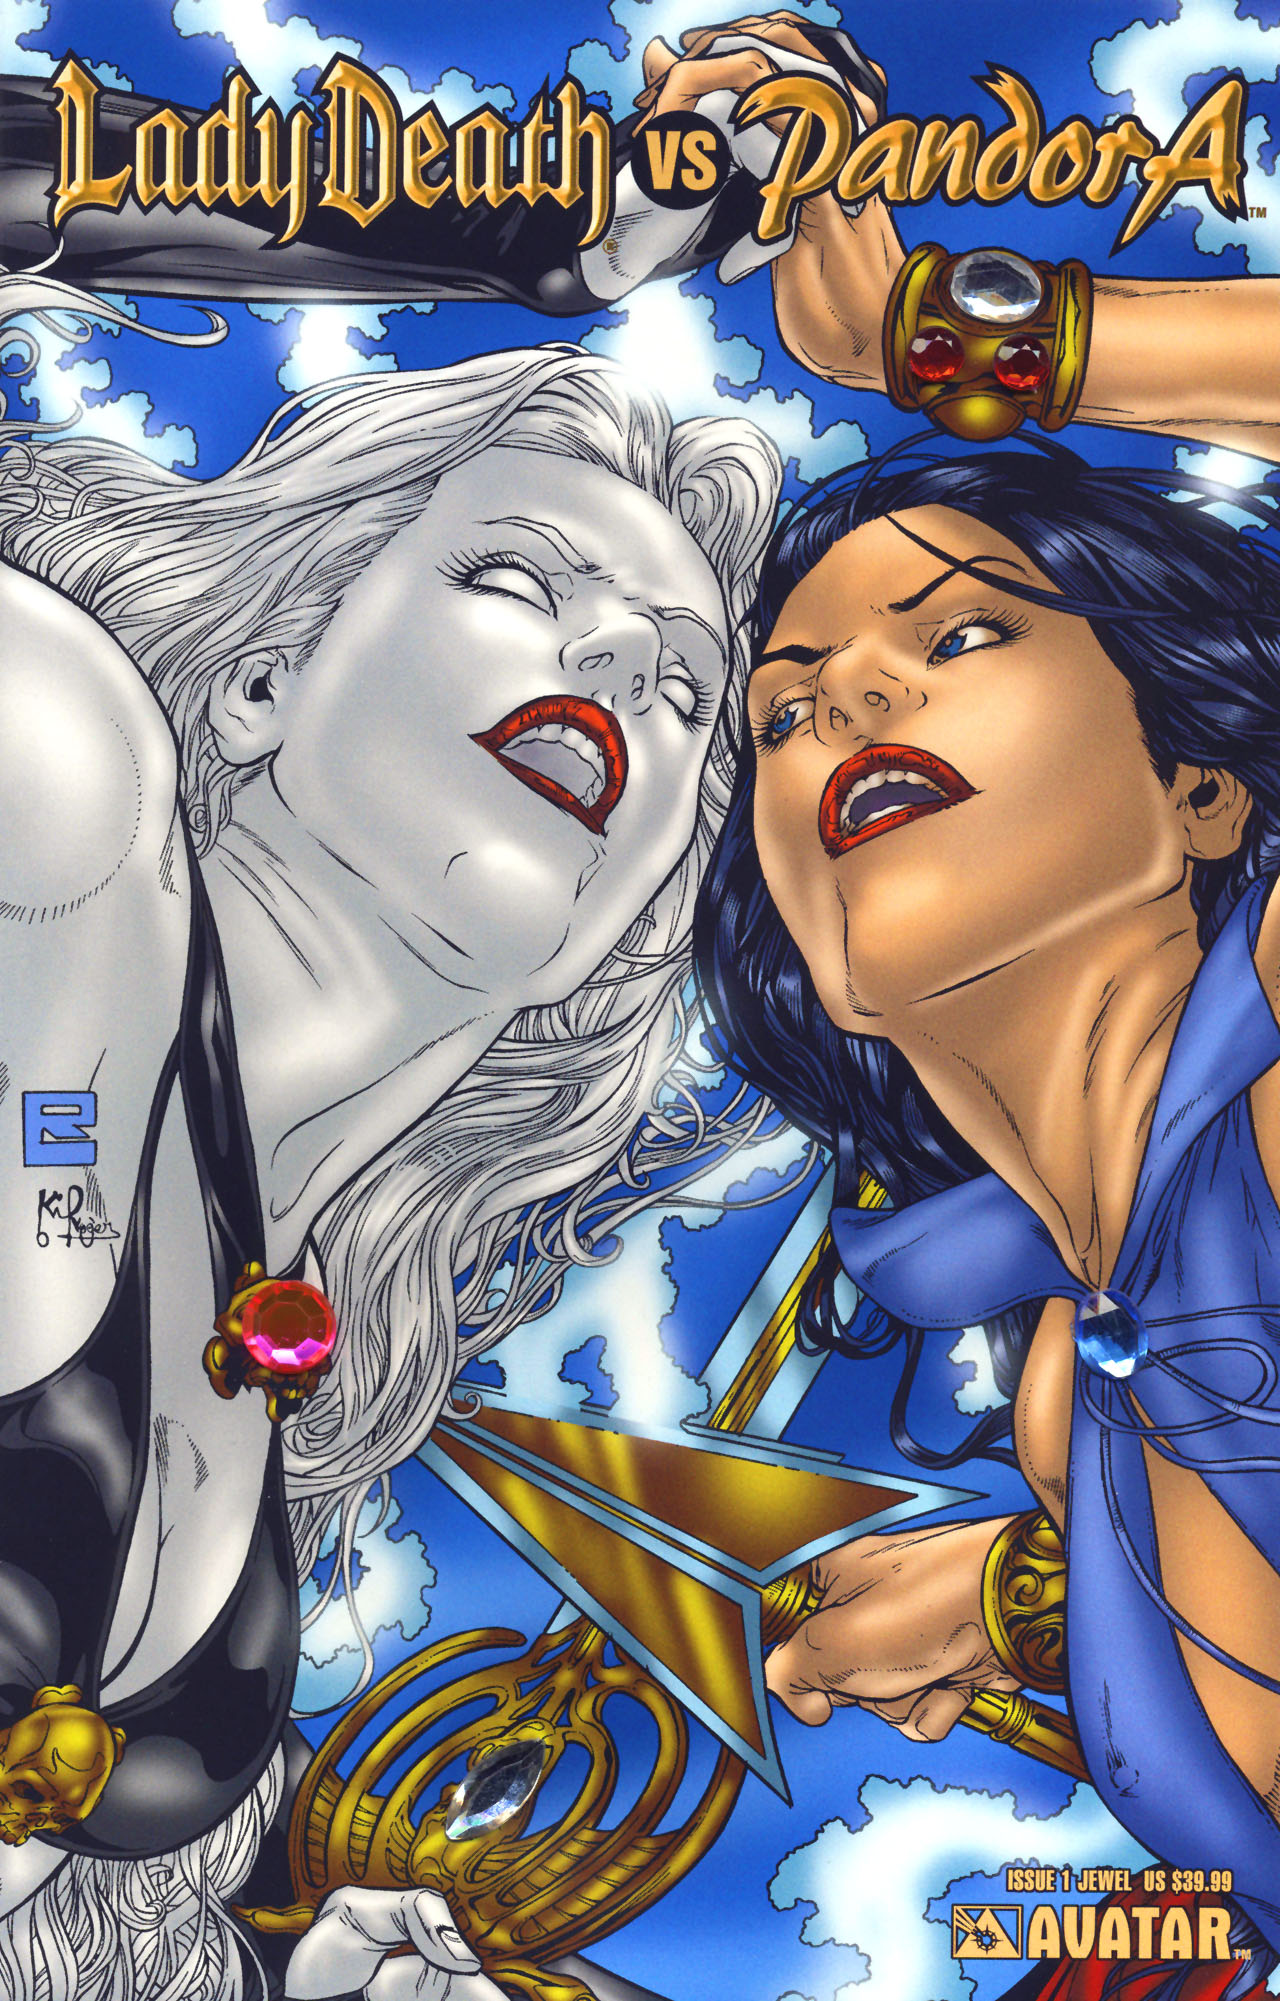 Read online Lady Death vs. Pandora comic -  Issue # Full - 10